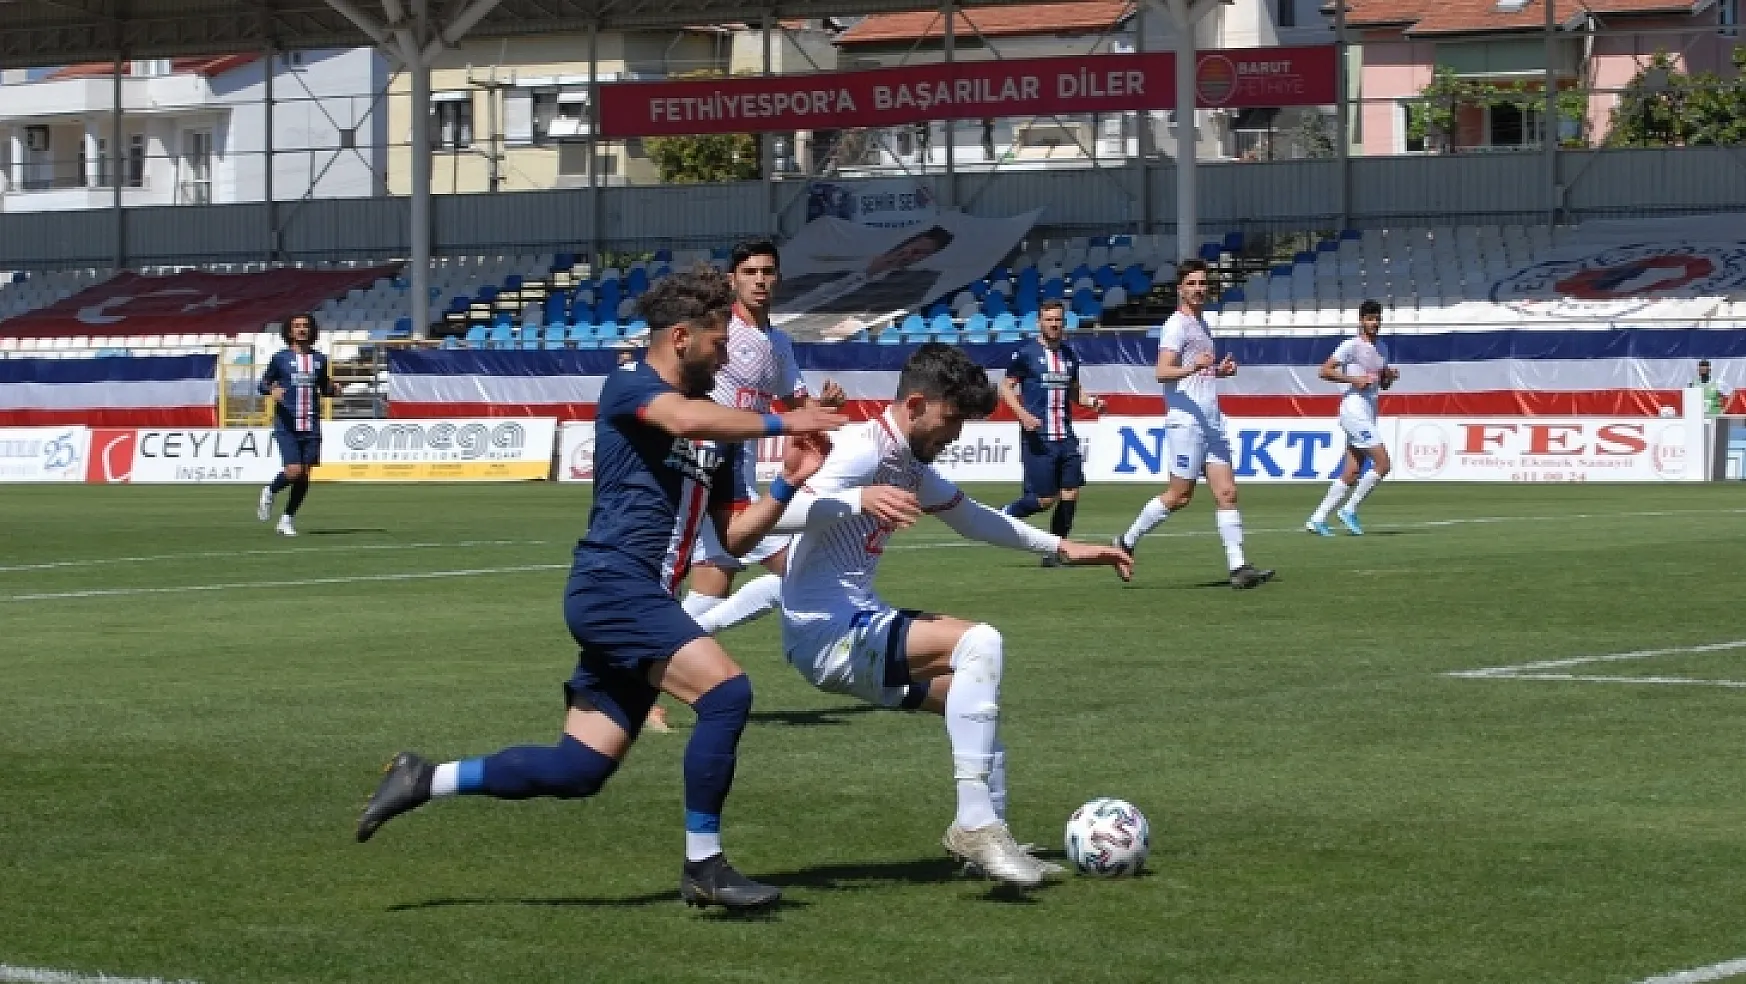 Fethiyespor Tokatspor'u eli boş gönderdi 2-0 